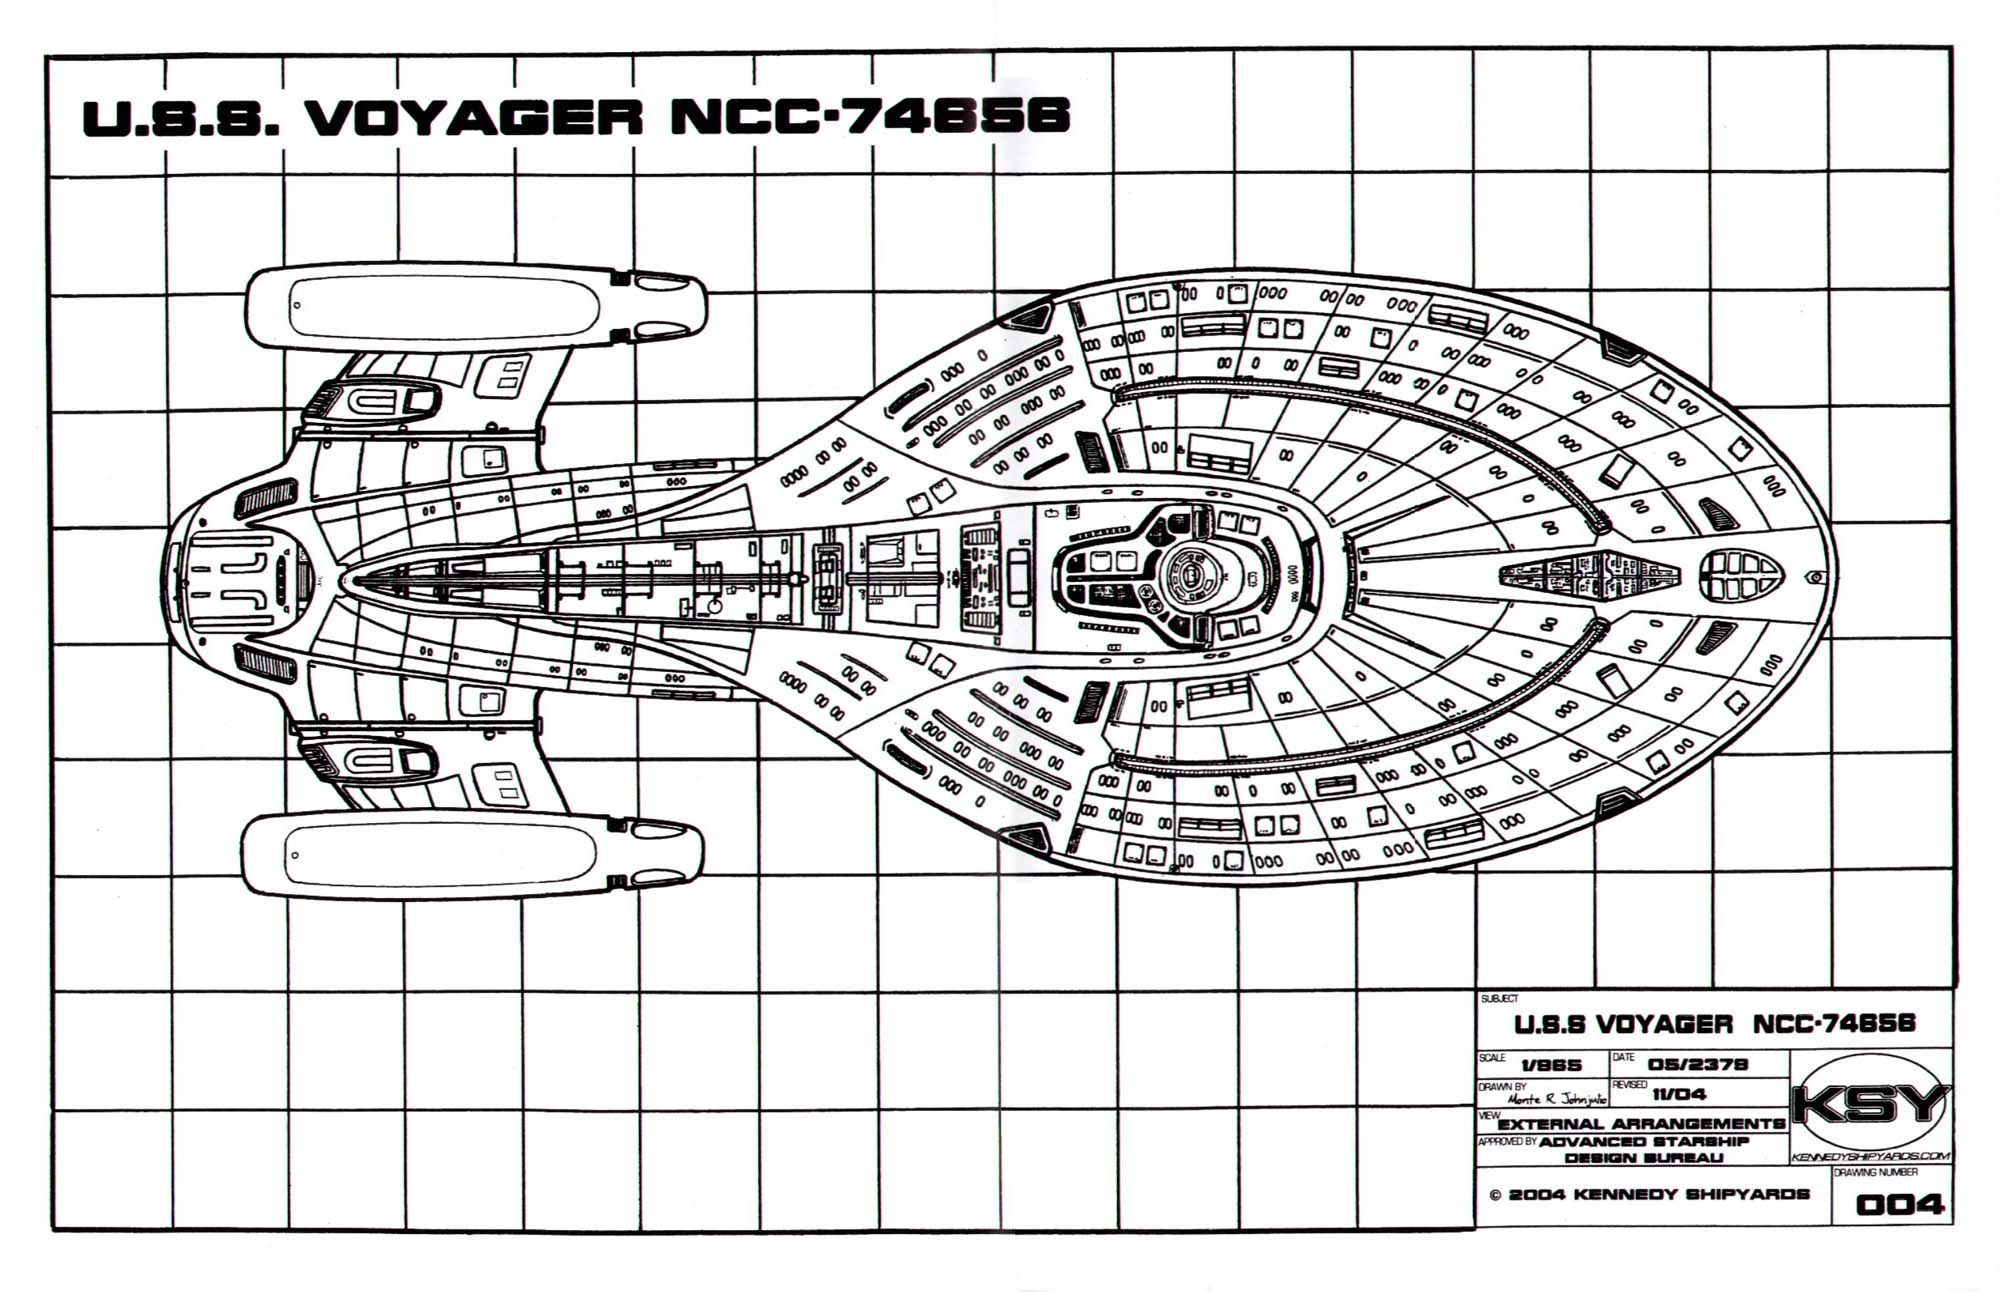 Voyager Spacecraft Blueprints